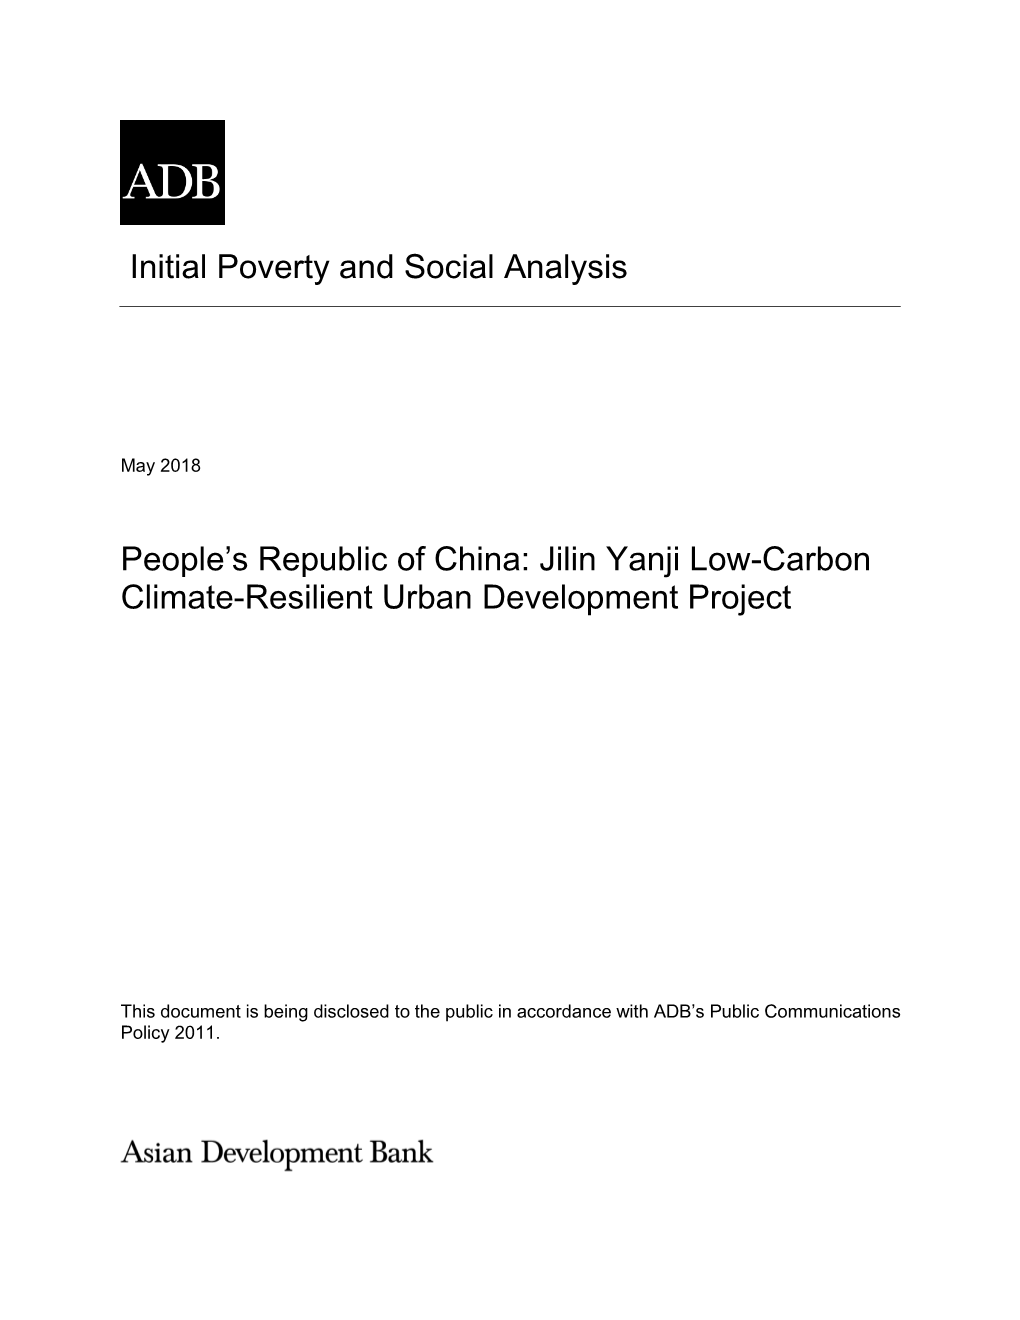 Jilin Yanji Low-Carbon Climate-Resilient Urban Development Project